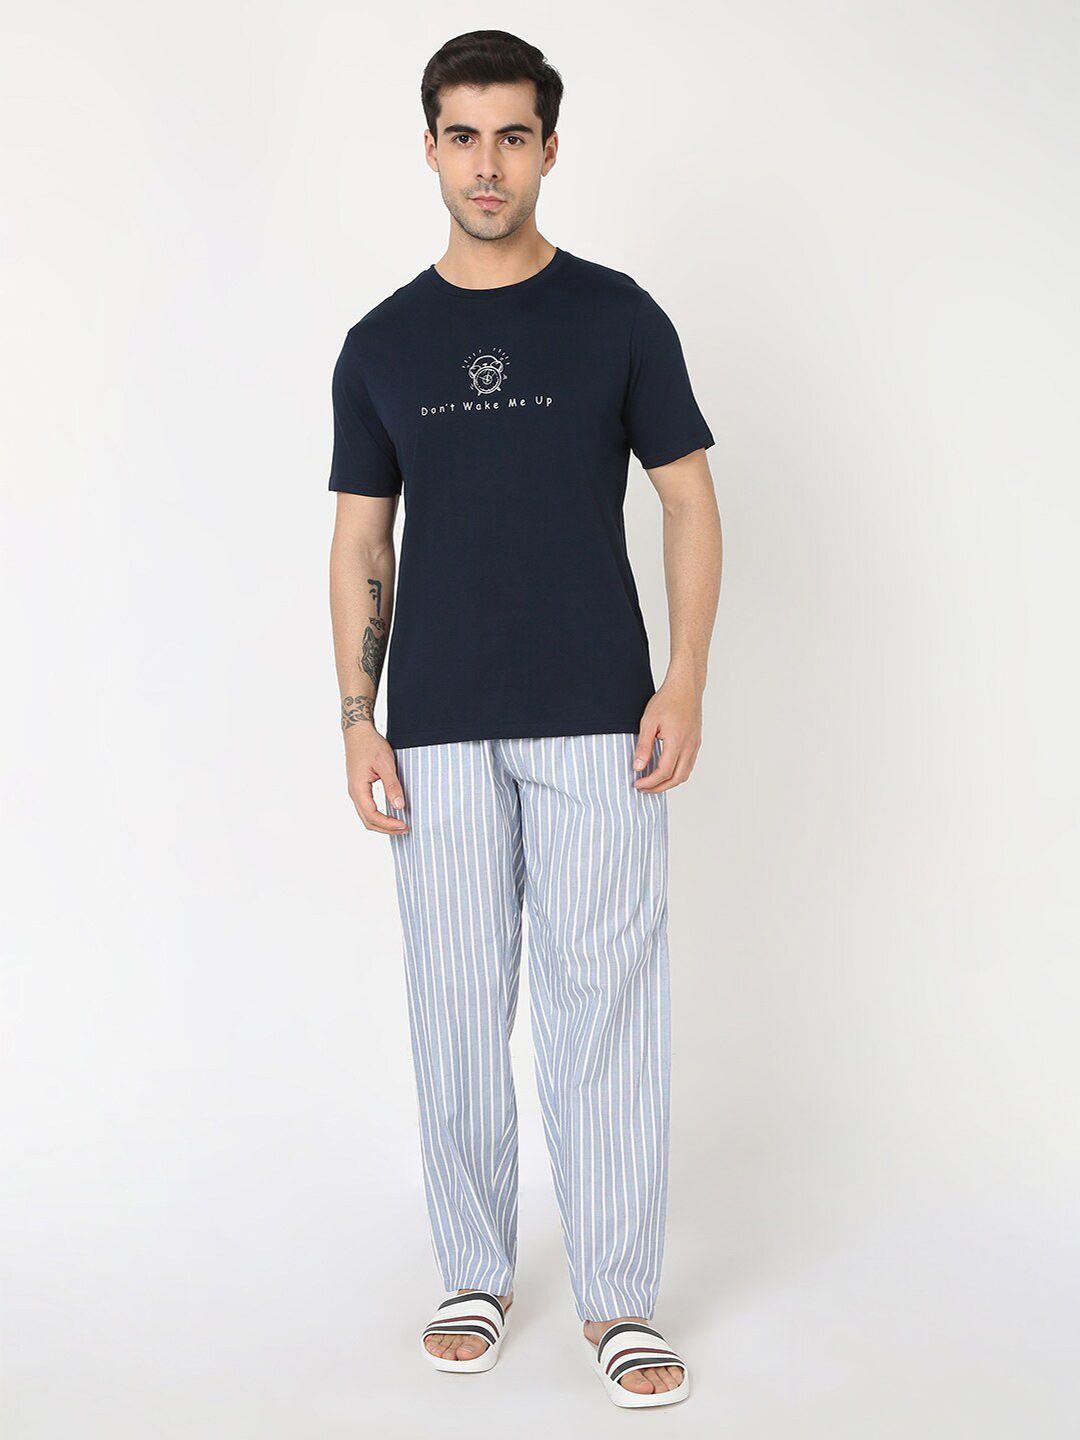 r&b typography printed pure cotton t-shirt & striped pyjamas